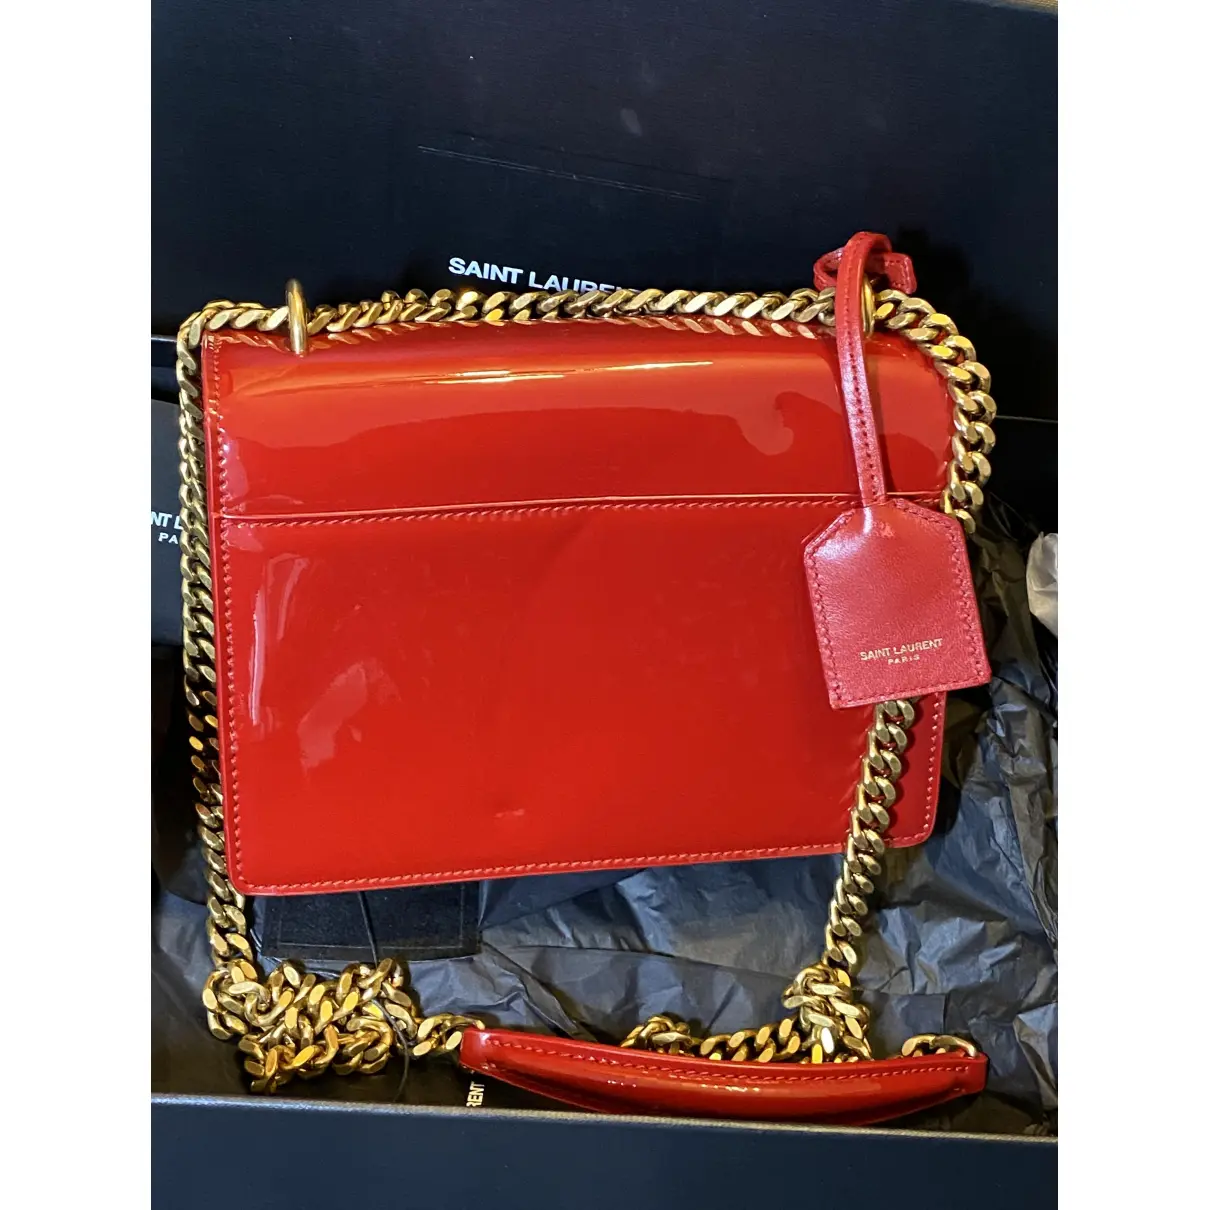 Buy Saint Laurent Sunset patent leather crossbody bag online